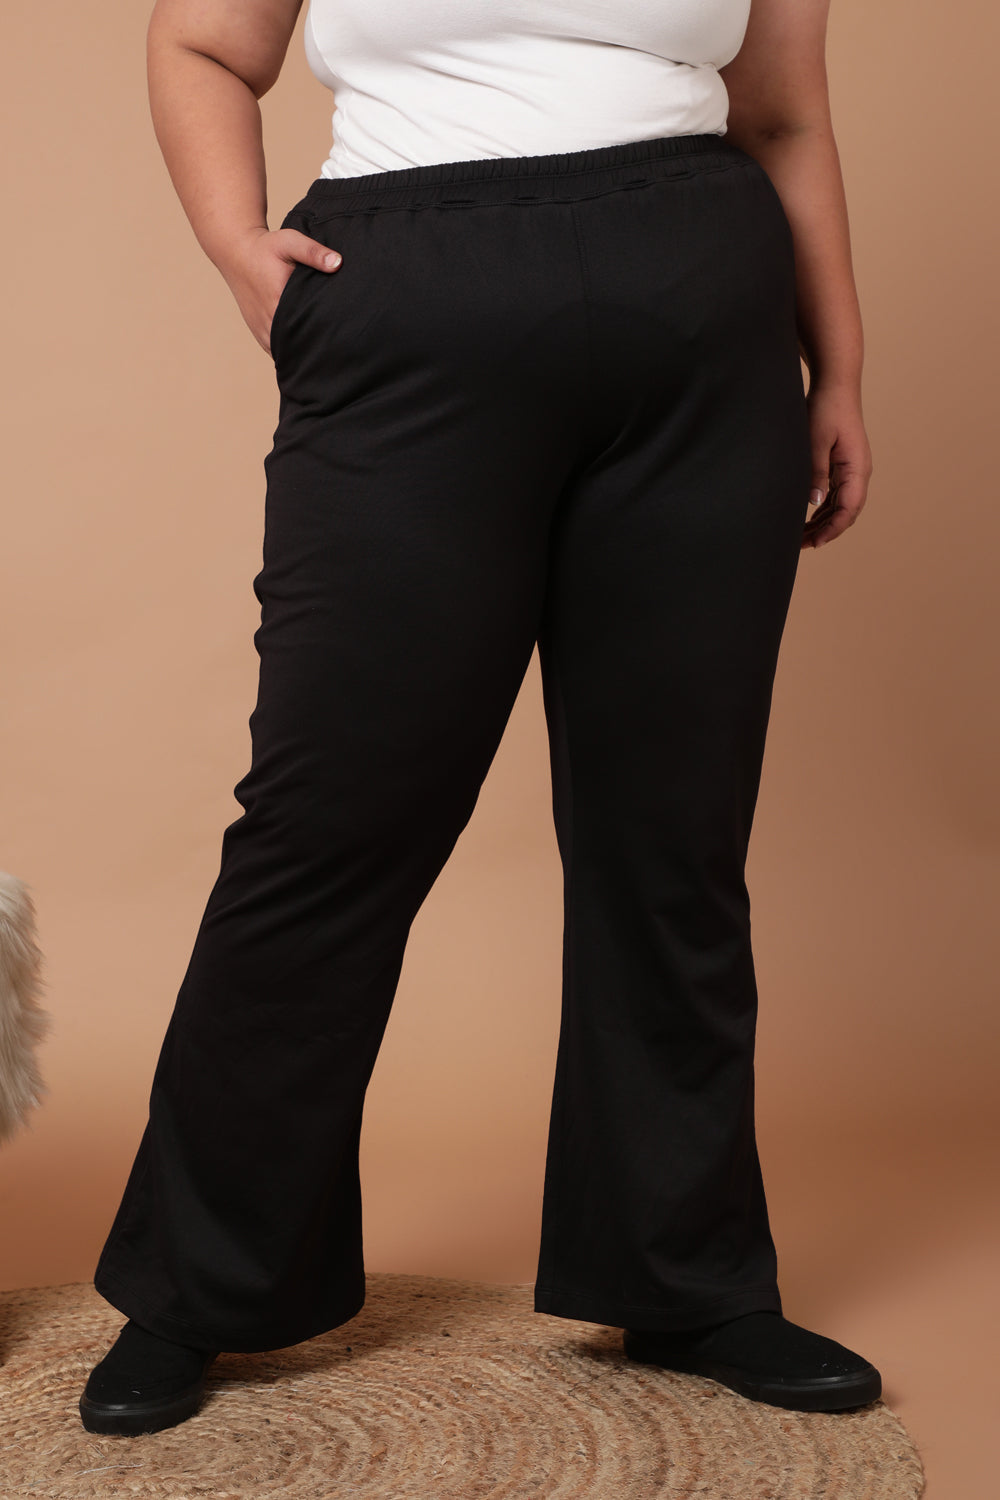 Buy Plus Size Black Bootcut Fleece Pants